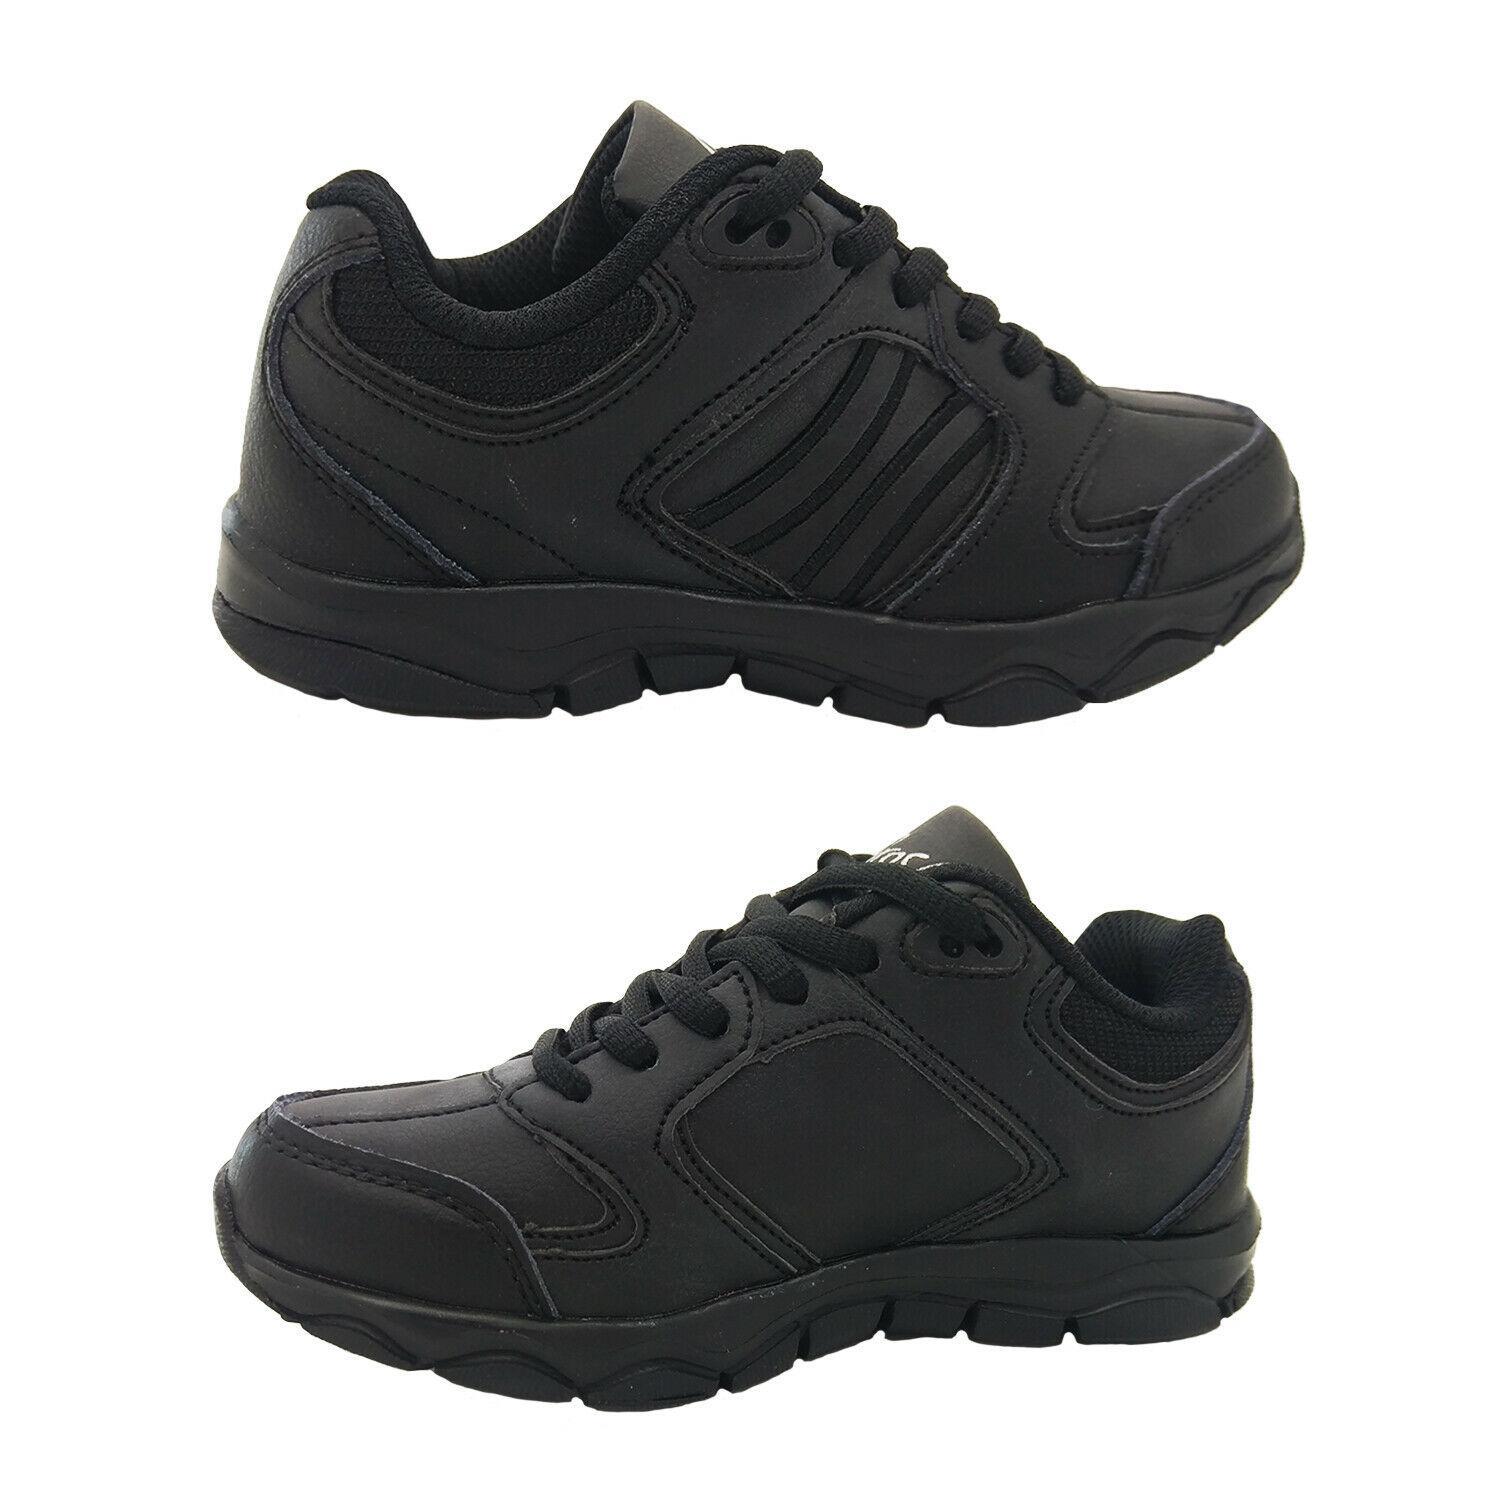 Boys Shoes Grosby Holt School Shoe Sneaker Lace up Lightweight Size 12-3 Black 1